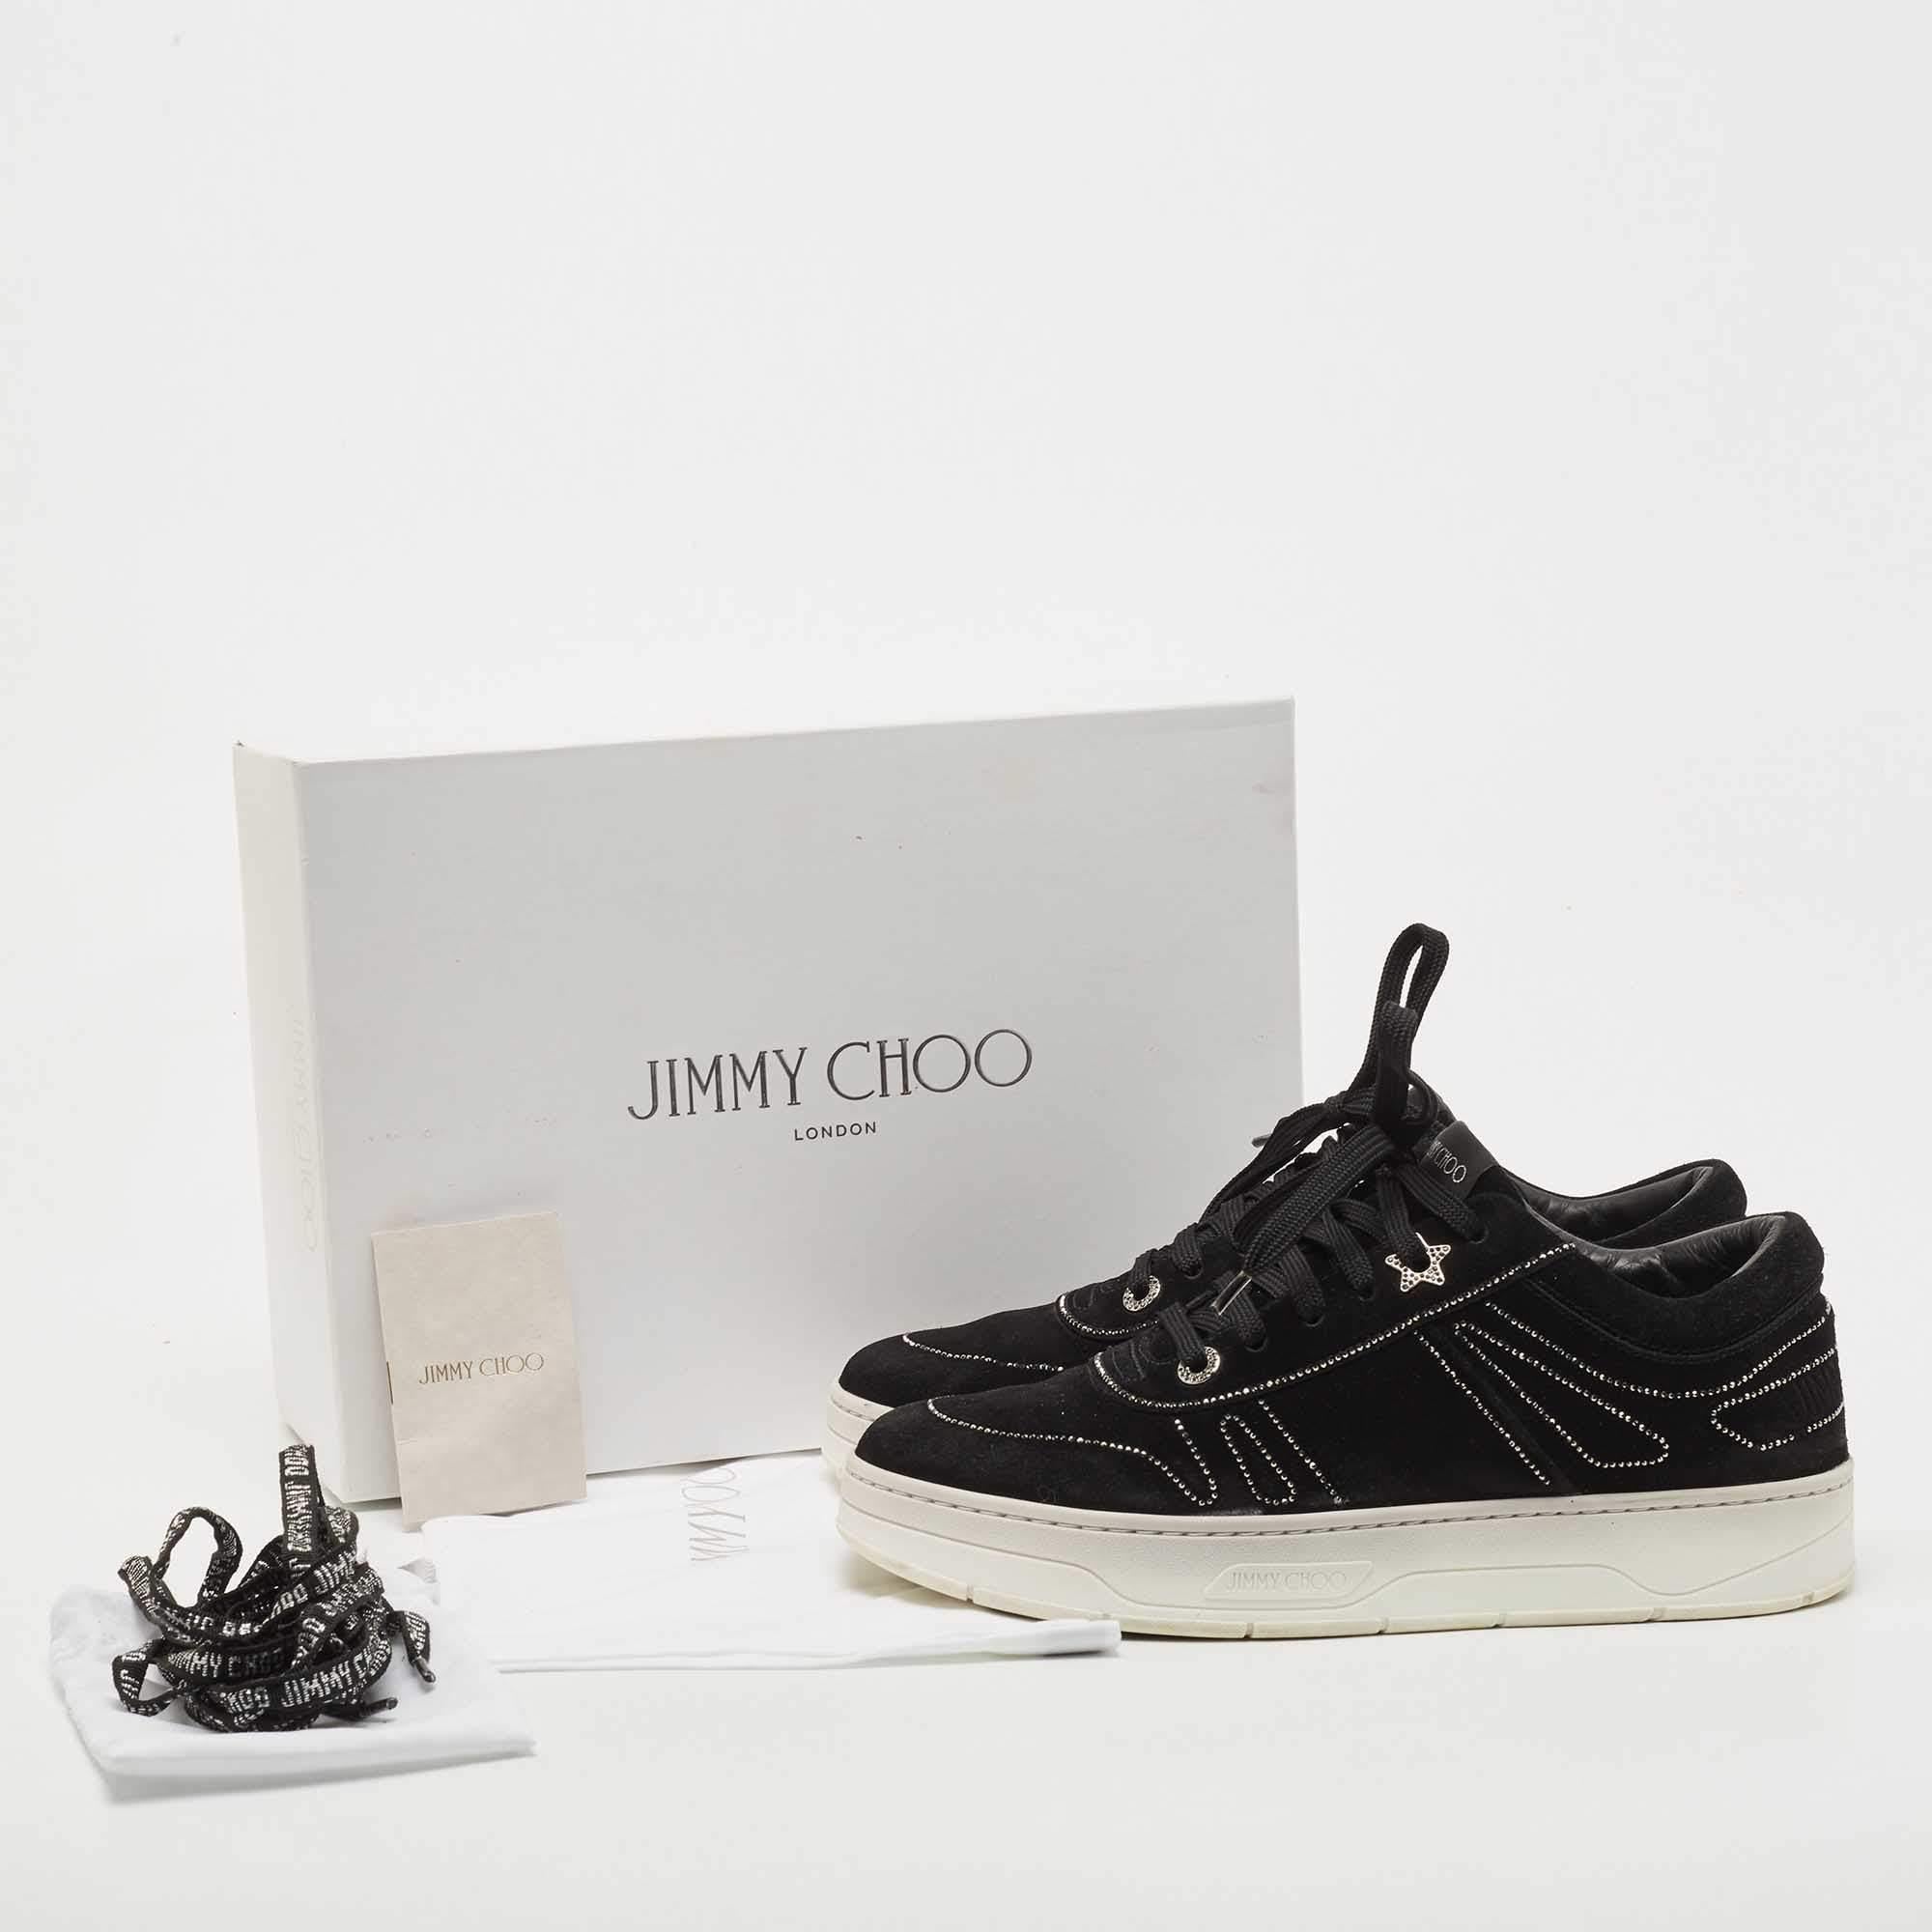 Jimmy Choo Black Suede Embellished Low Top Sneakers Size 40 5